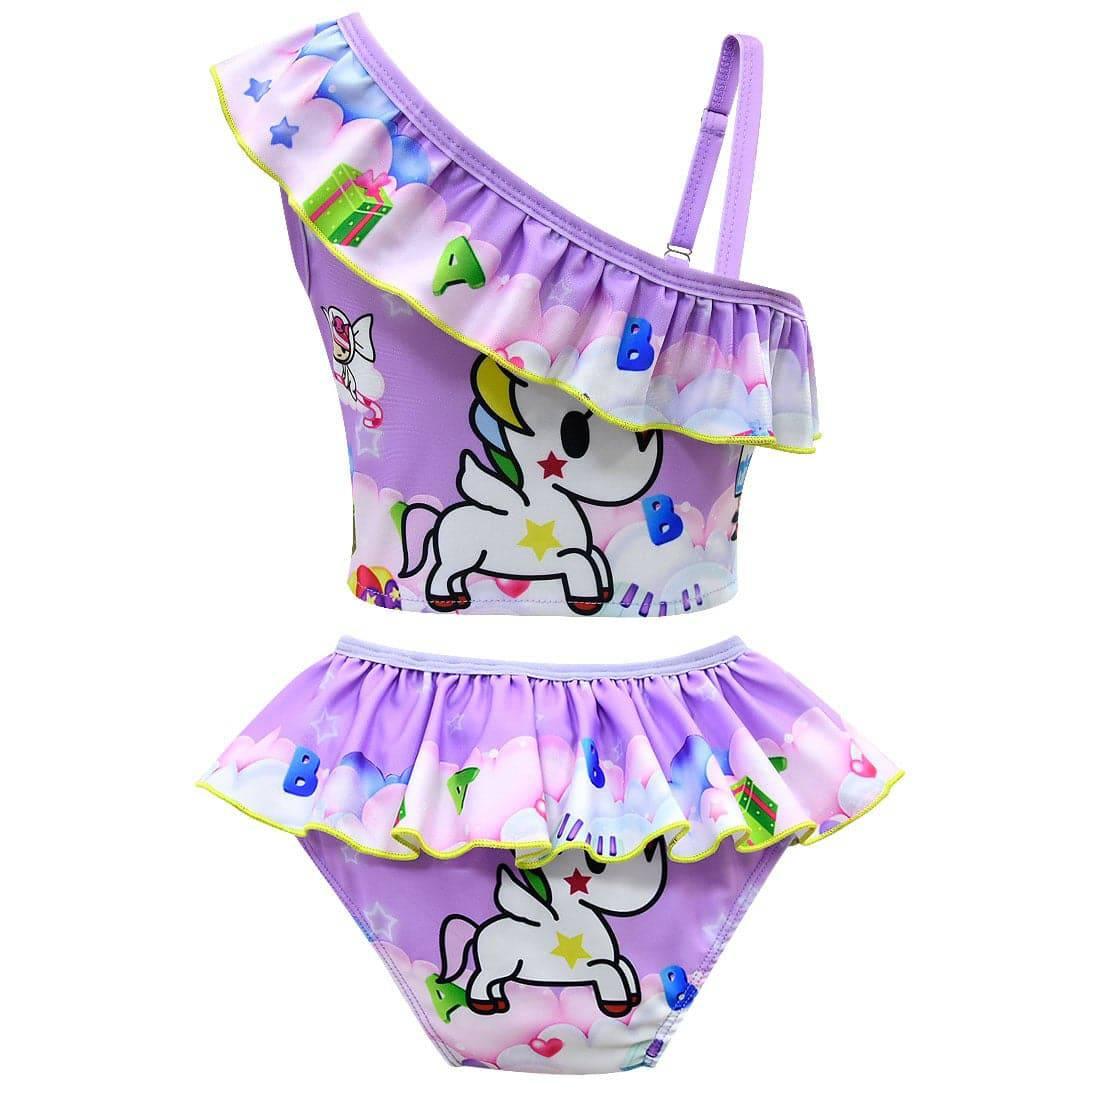 Unicorn swimsuit with asymmetric straps - Unicorn